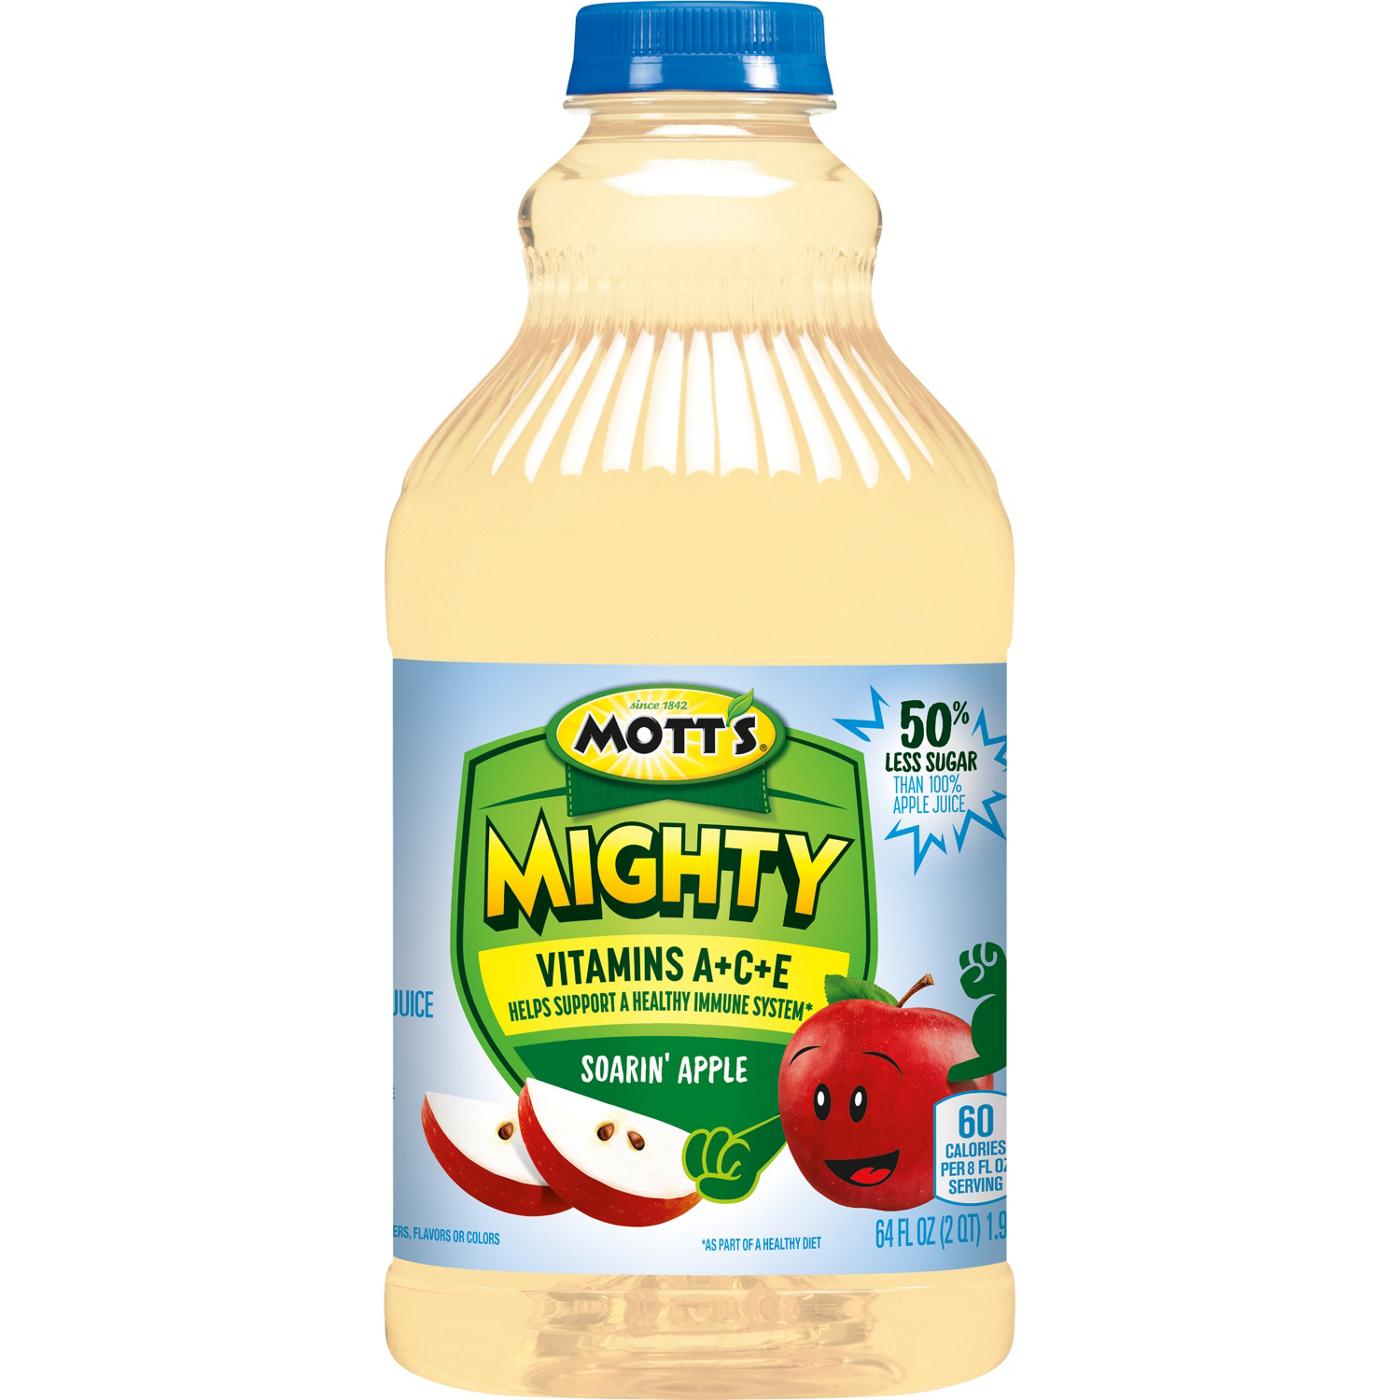 Mott's Mighty Soarin' Apple Juice; image 1 of 5